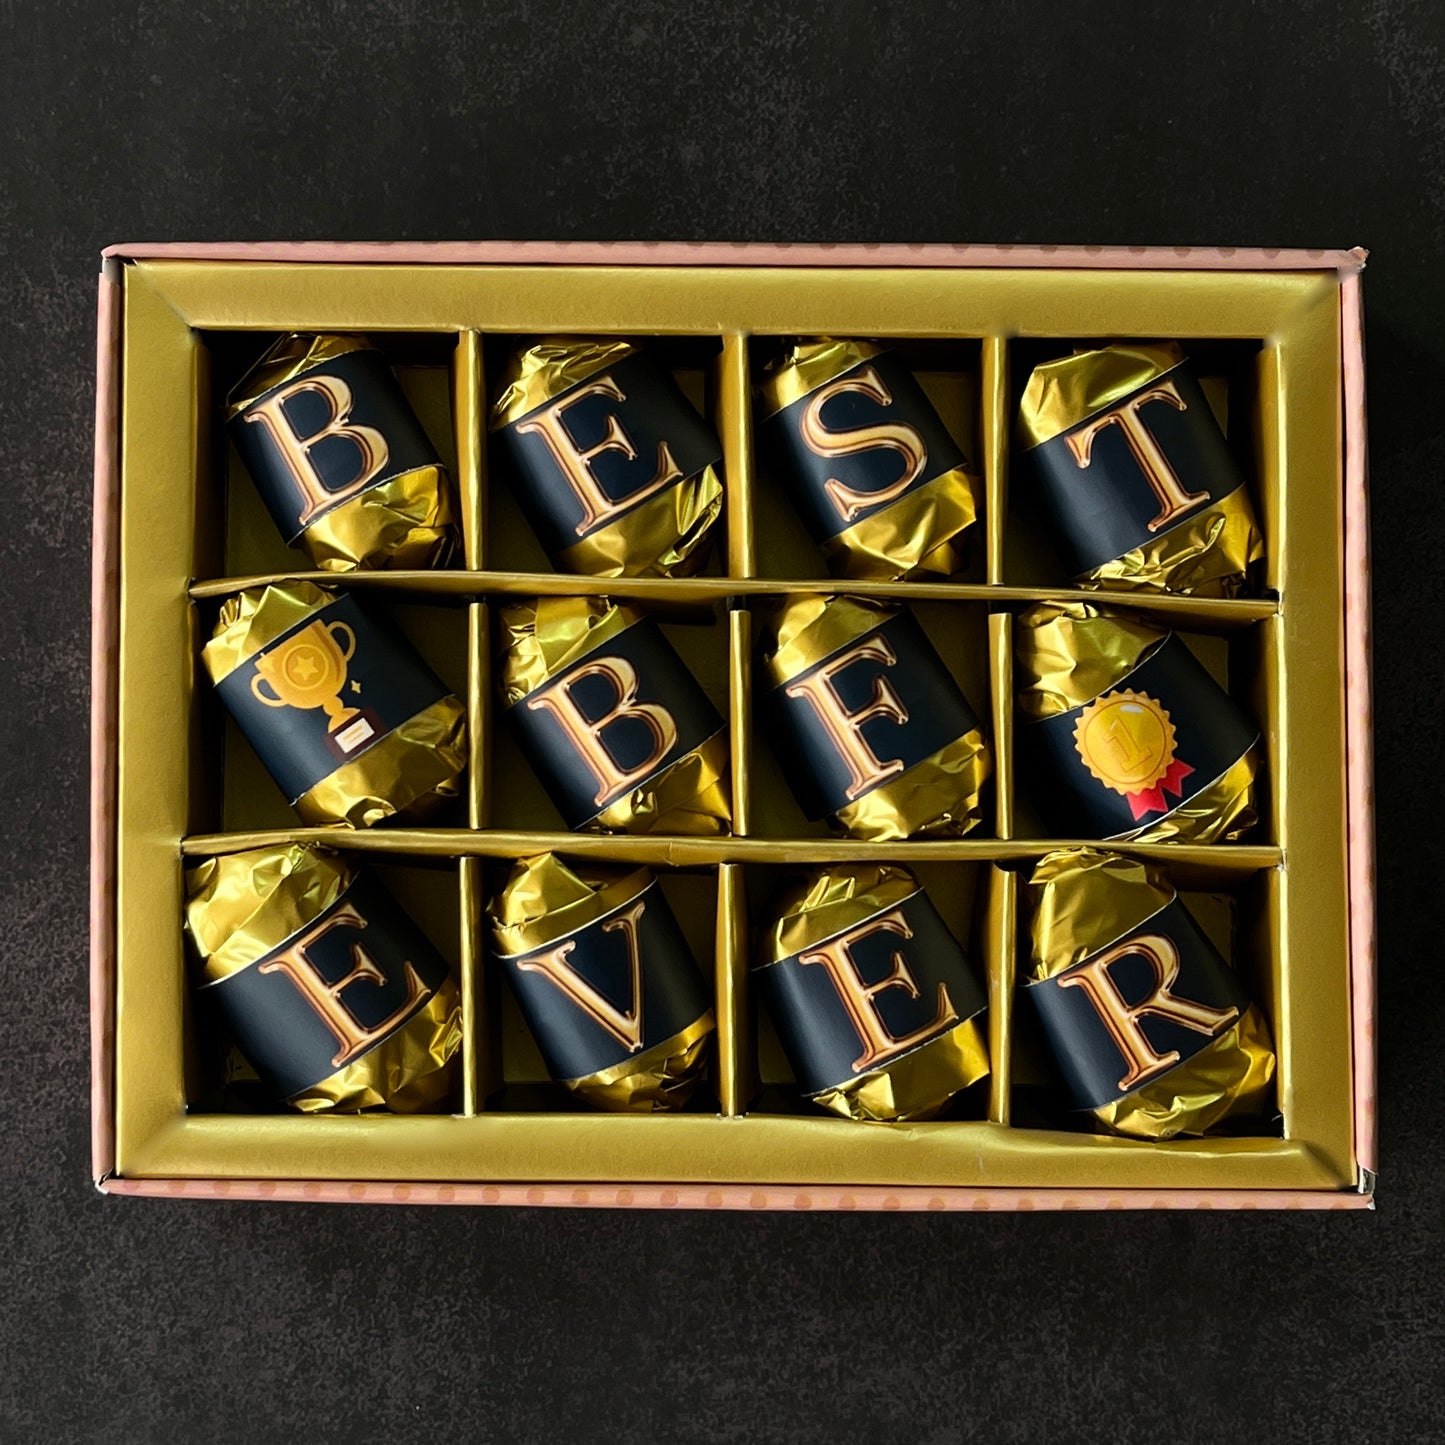 Best Boyfriend Ever - Valentine's Day Chocolate Gift Box - Almond and Chocolate Dates - 12 Pieces